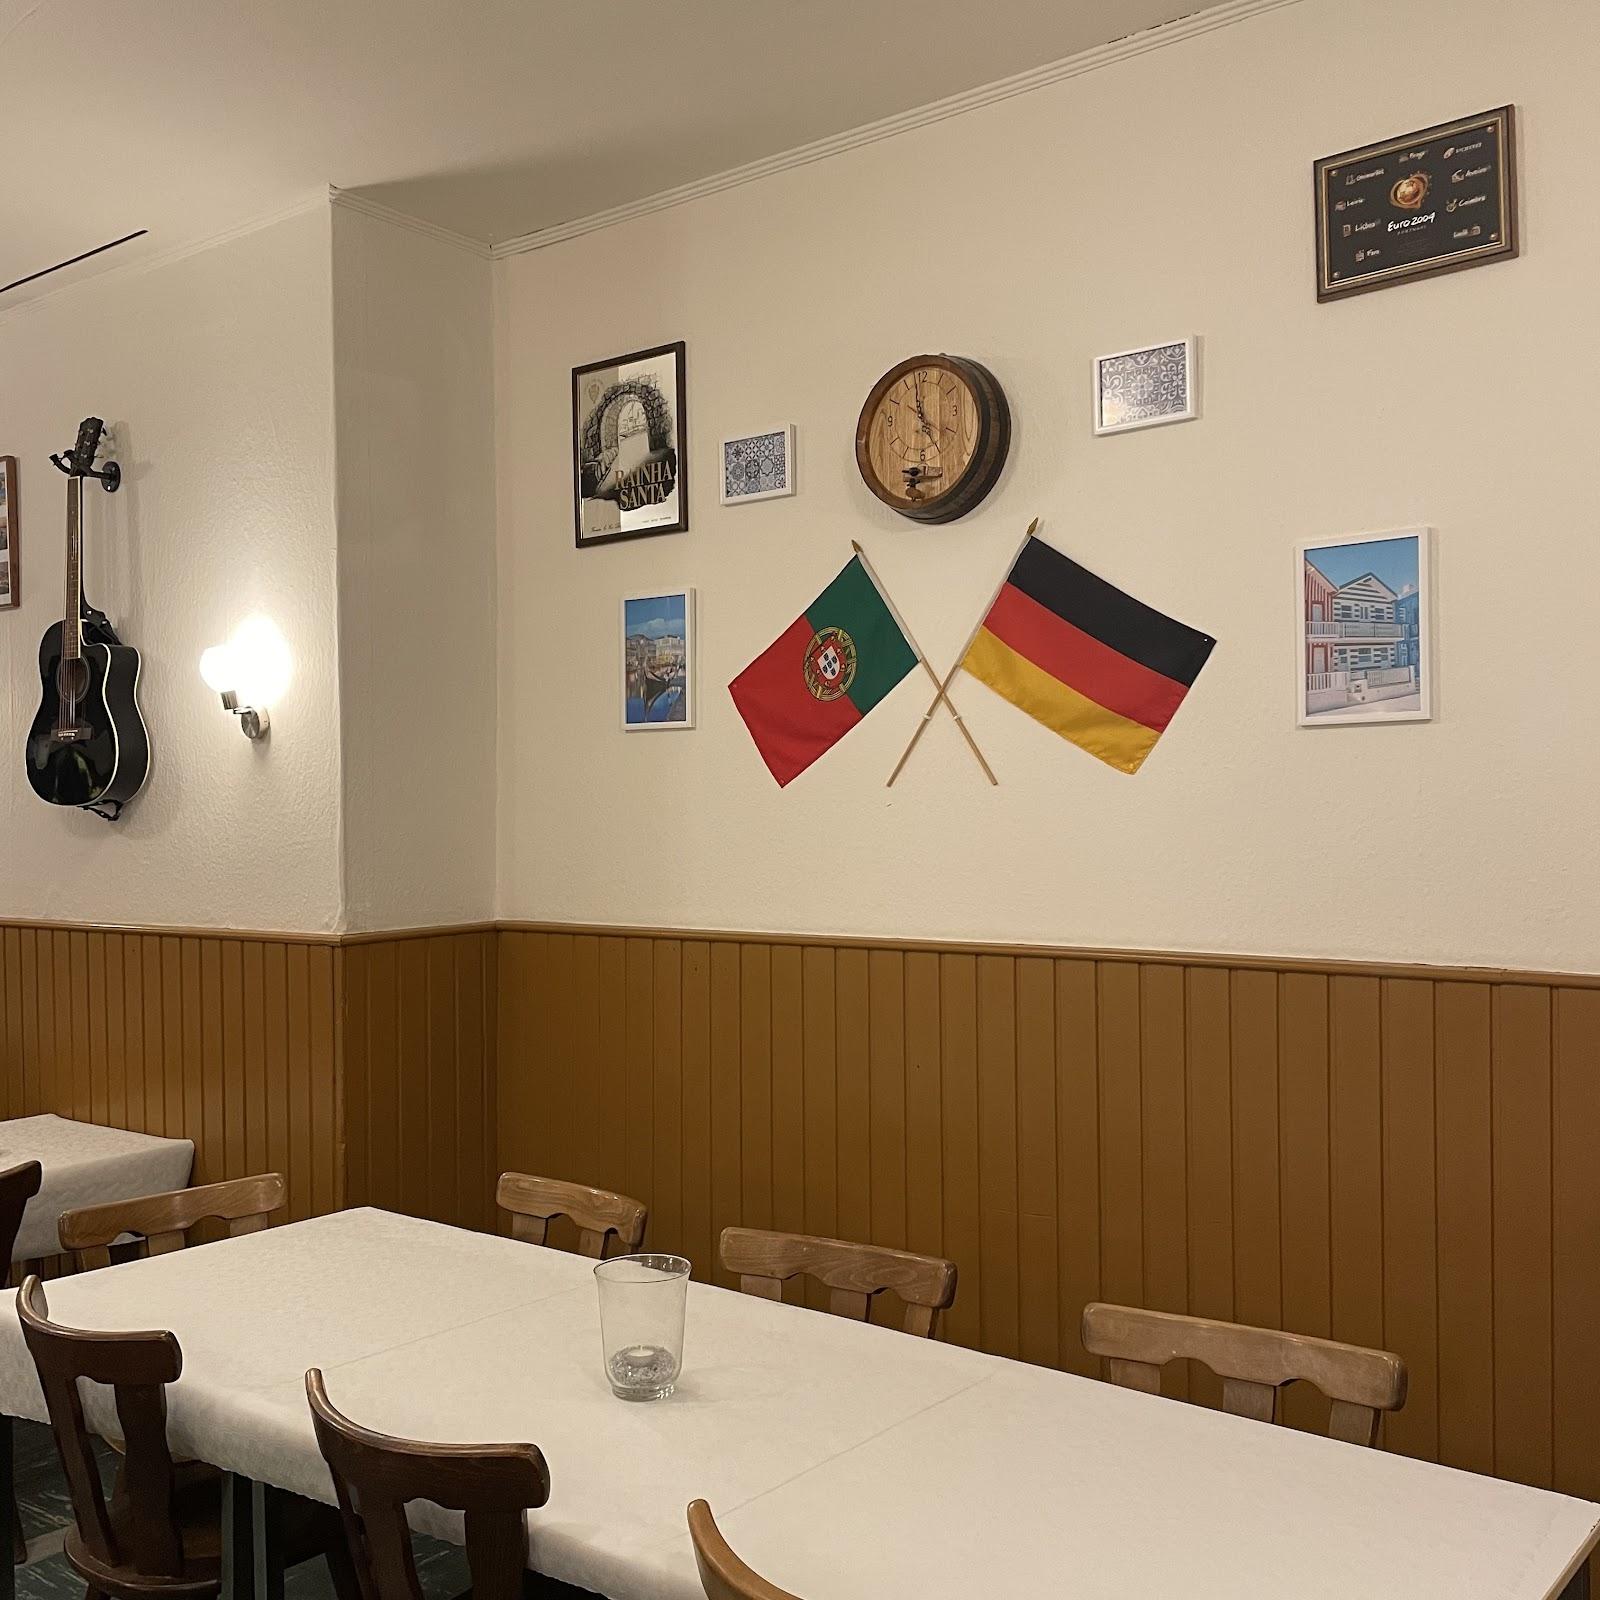 Restaurant "Ti Zé" in Dortmund